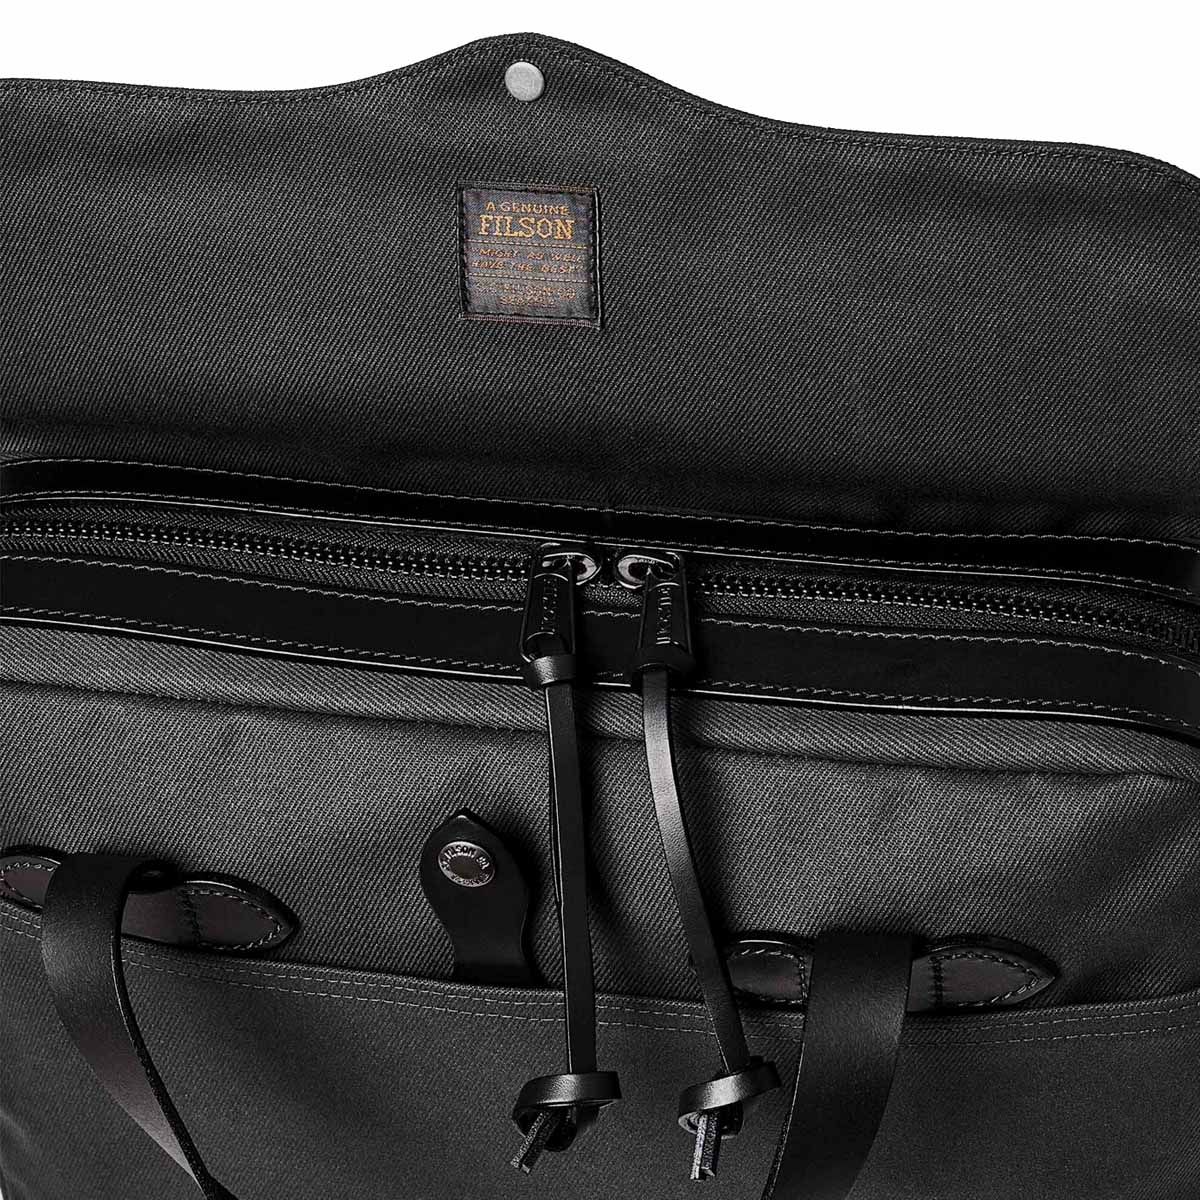 Filson Original Briefcase Faded Black, extraordinary bag for an ordinary day